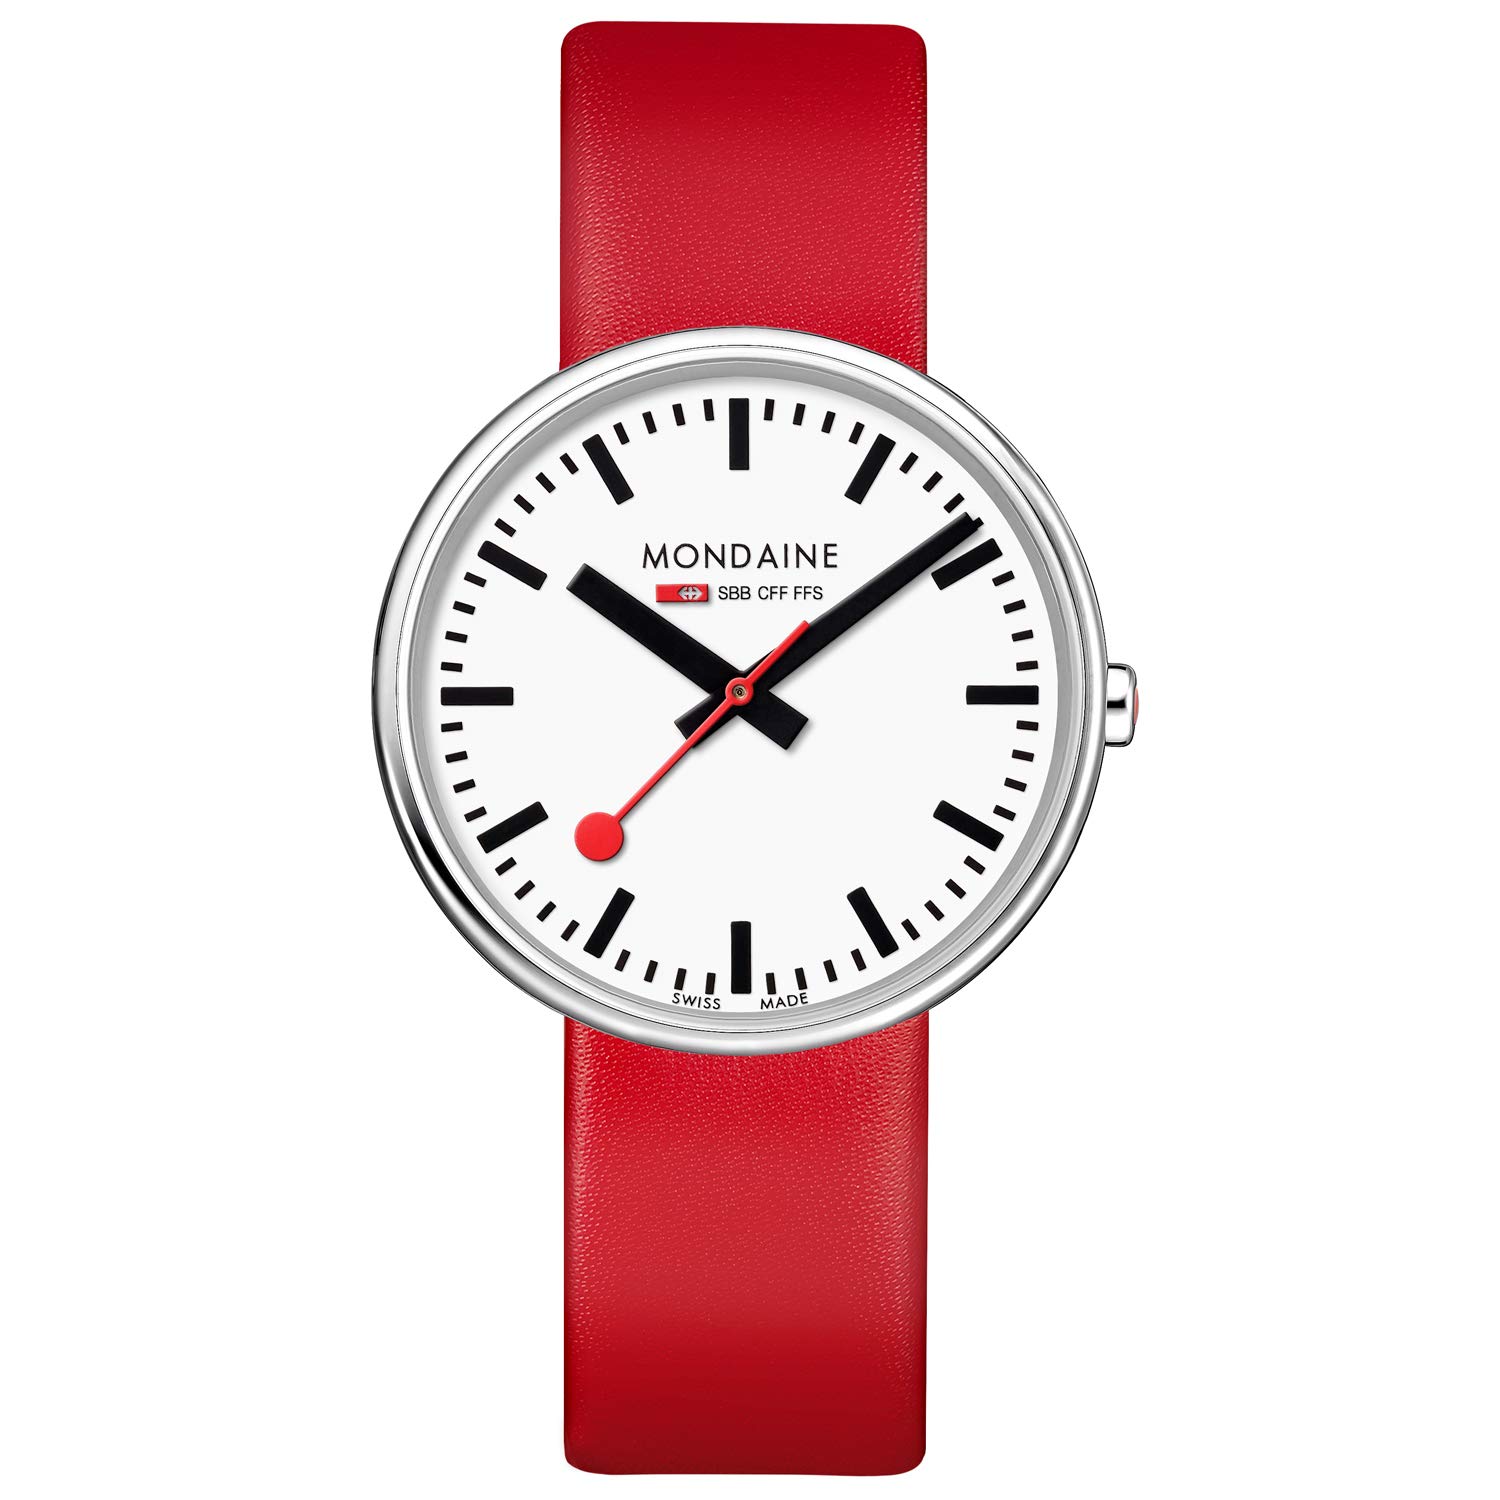 Mondaine Women's SBB Stainless Steel Swiss-Quartz Watch with Leather Strap, red (Model: MSX.3511B.LC)